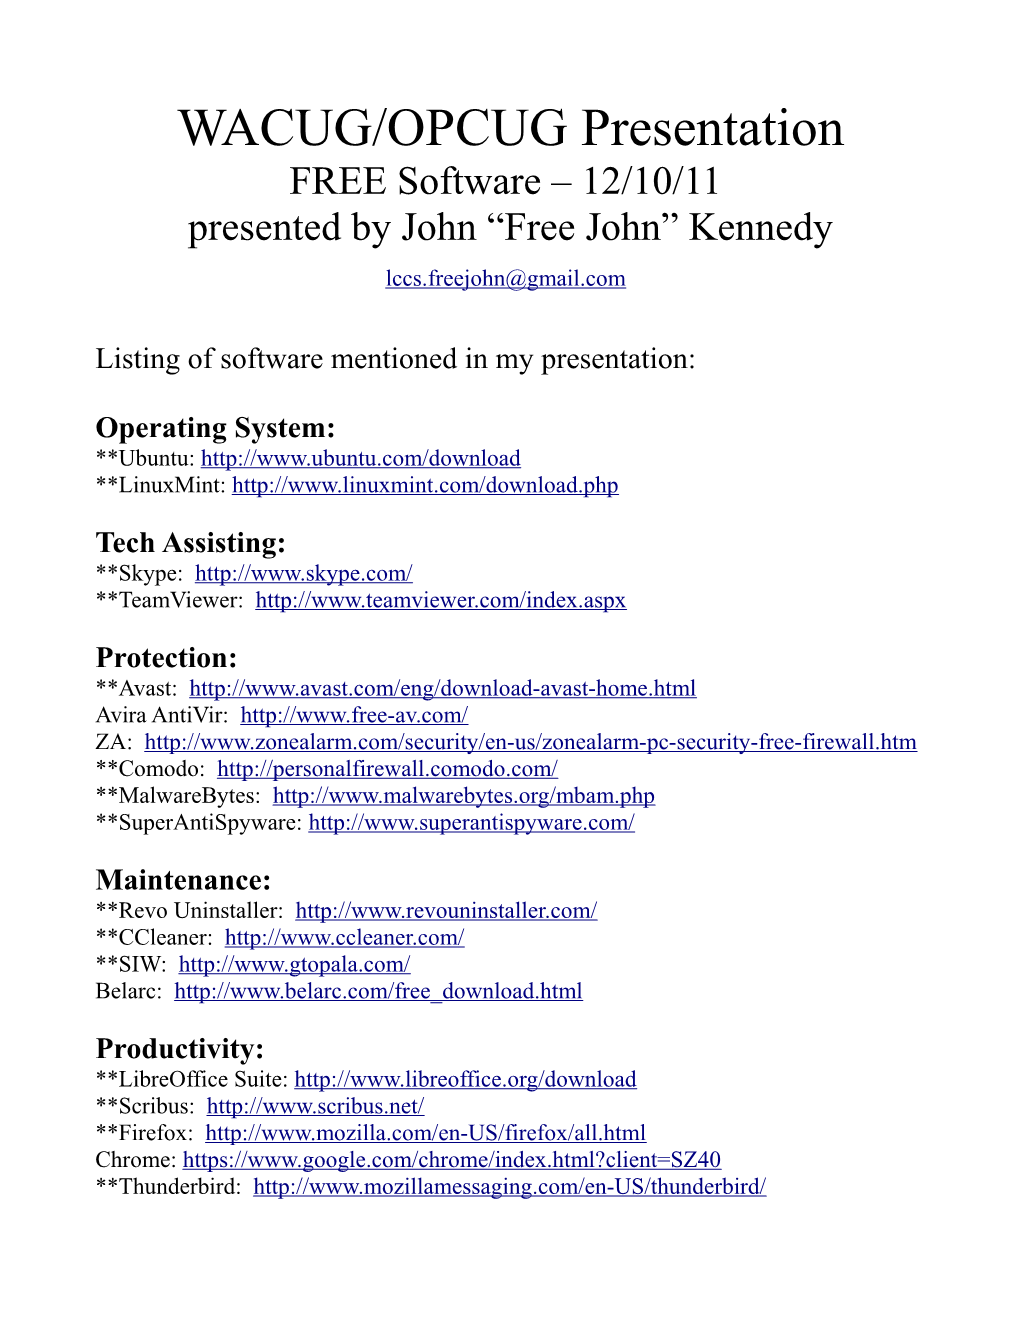 WACUG/OPCUG Presentation FREE Software – 12/10/11 Presented by John “Free John” Kennedy Lccs.Freejohn@Gmail.Com